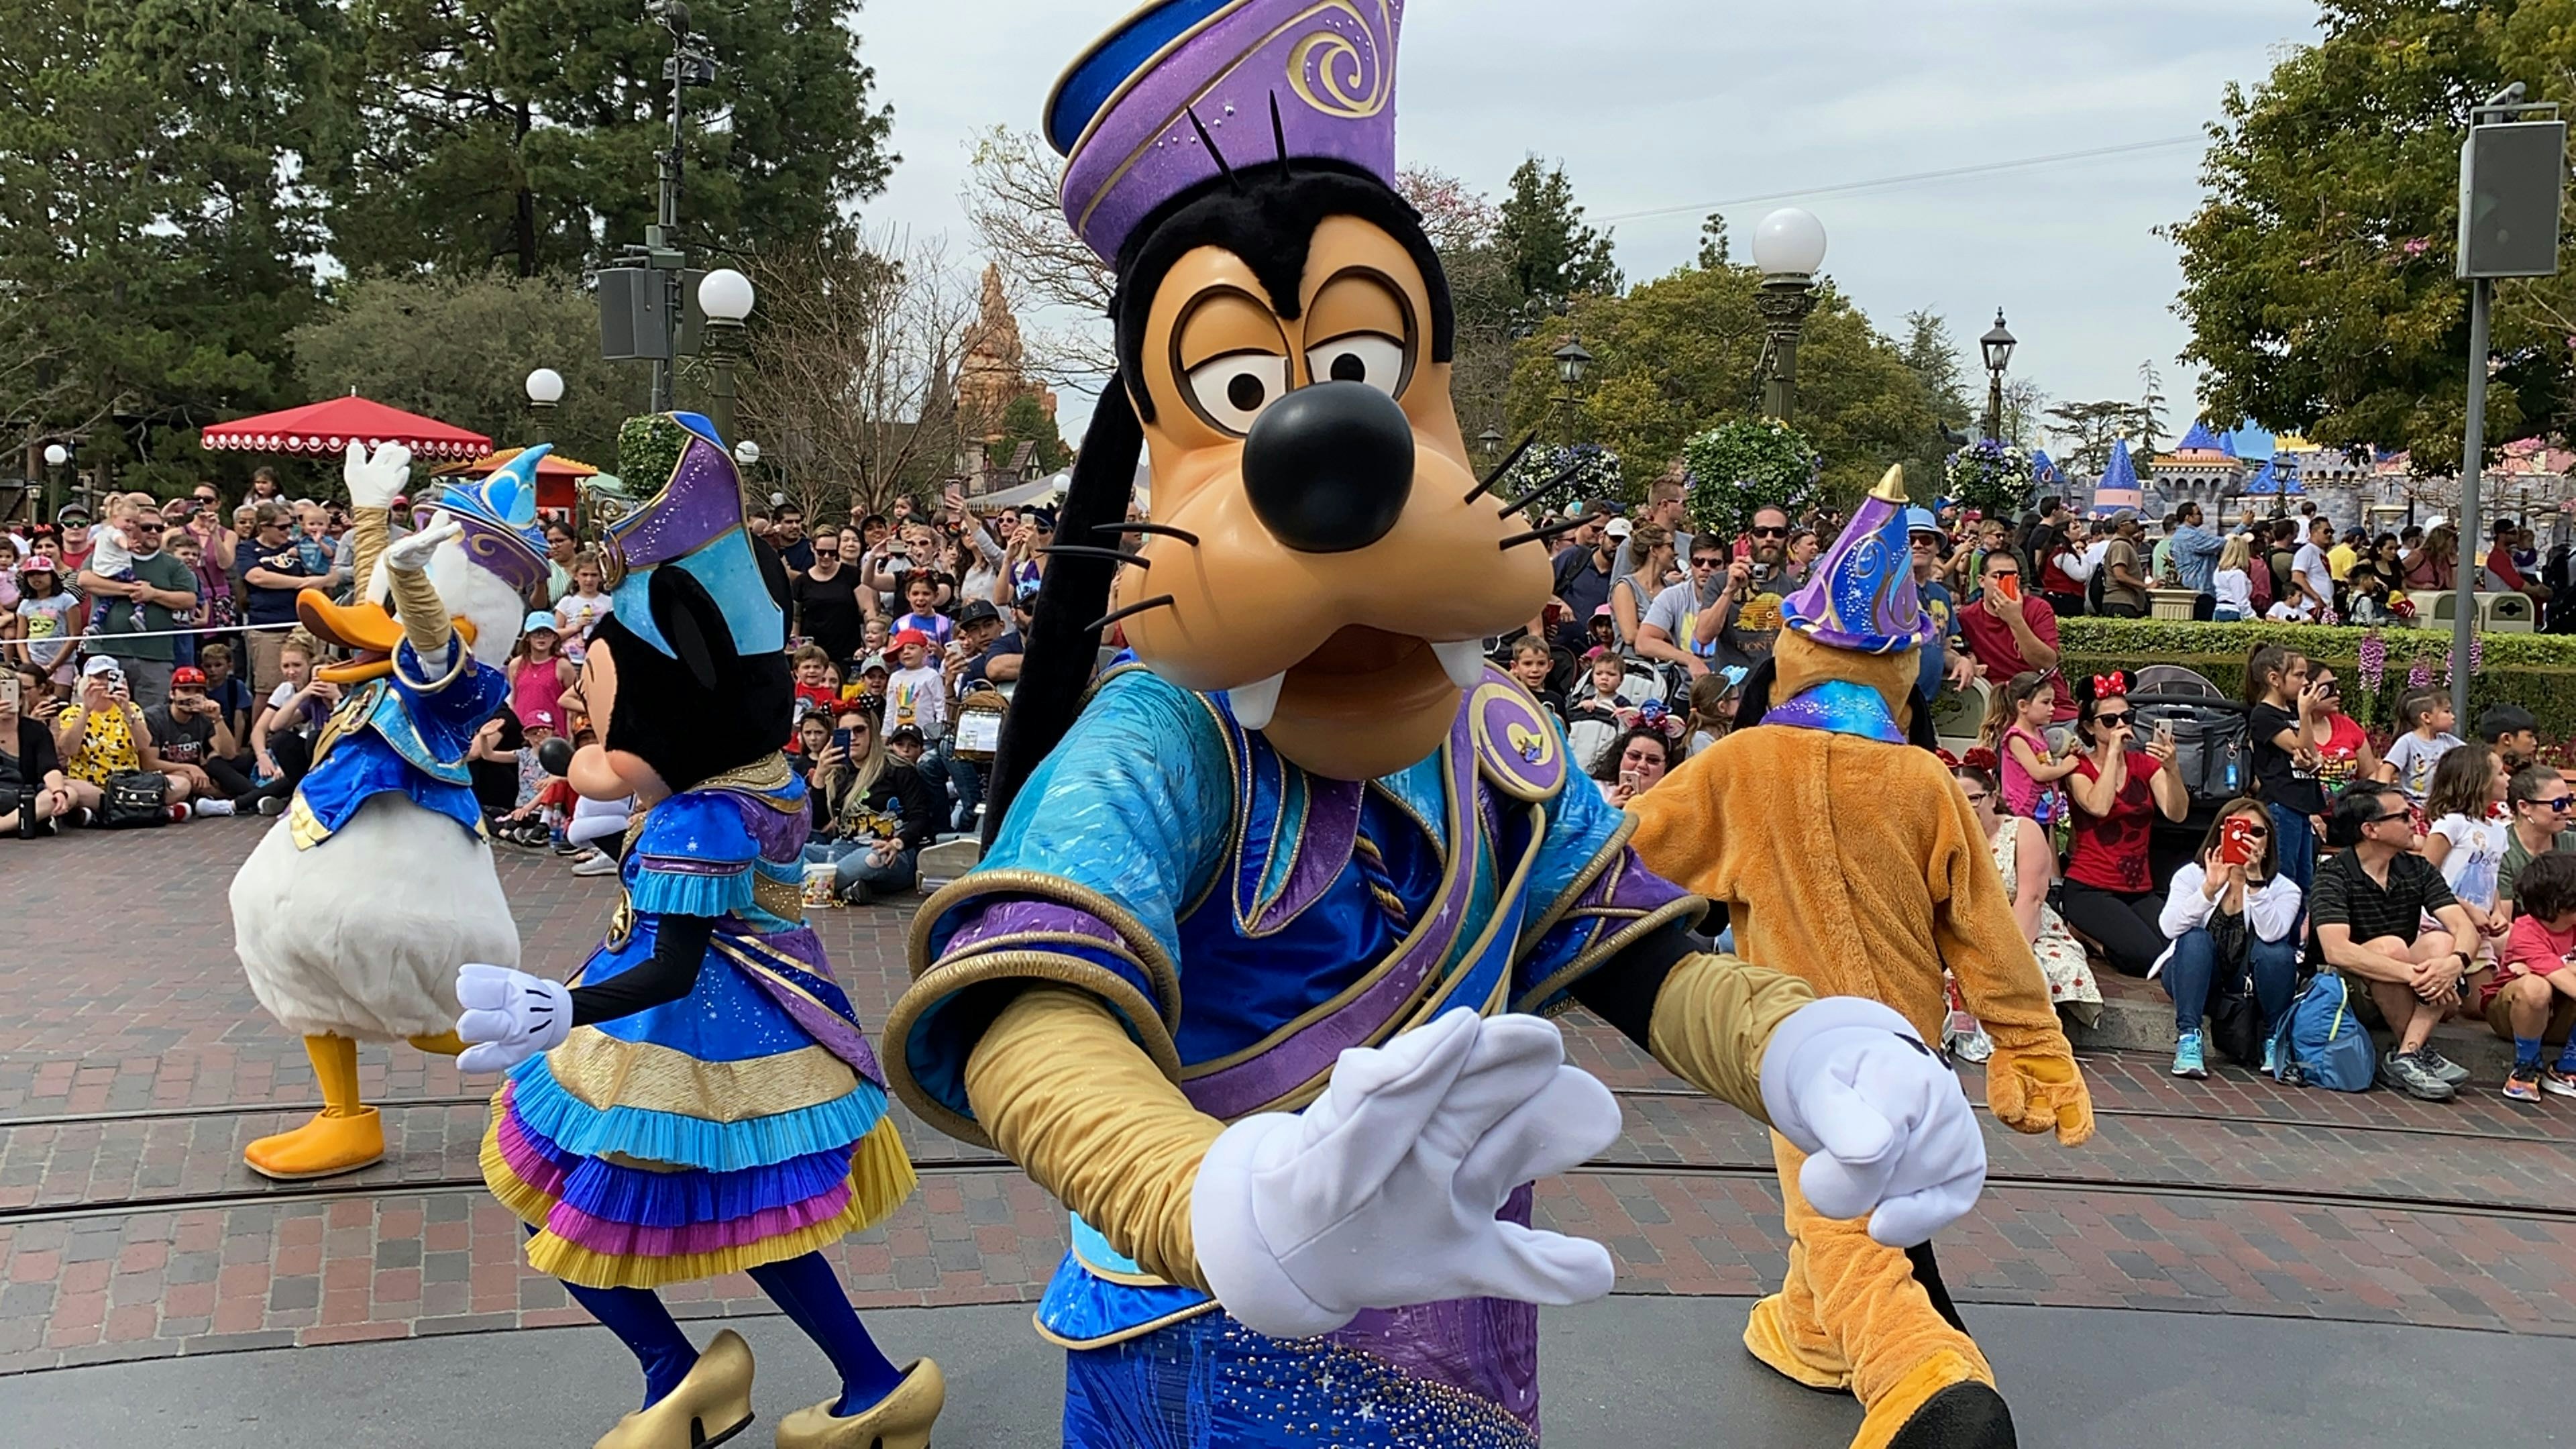 PHOTOS, VIDEO New "Magic Happens" Parade Debuts at Disneyland WDW